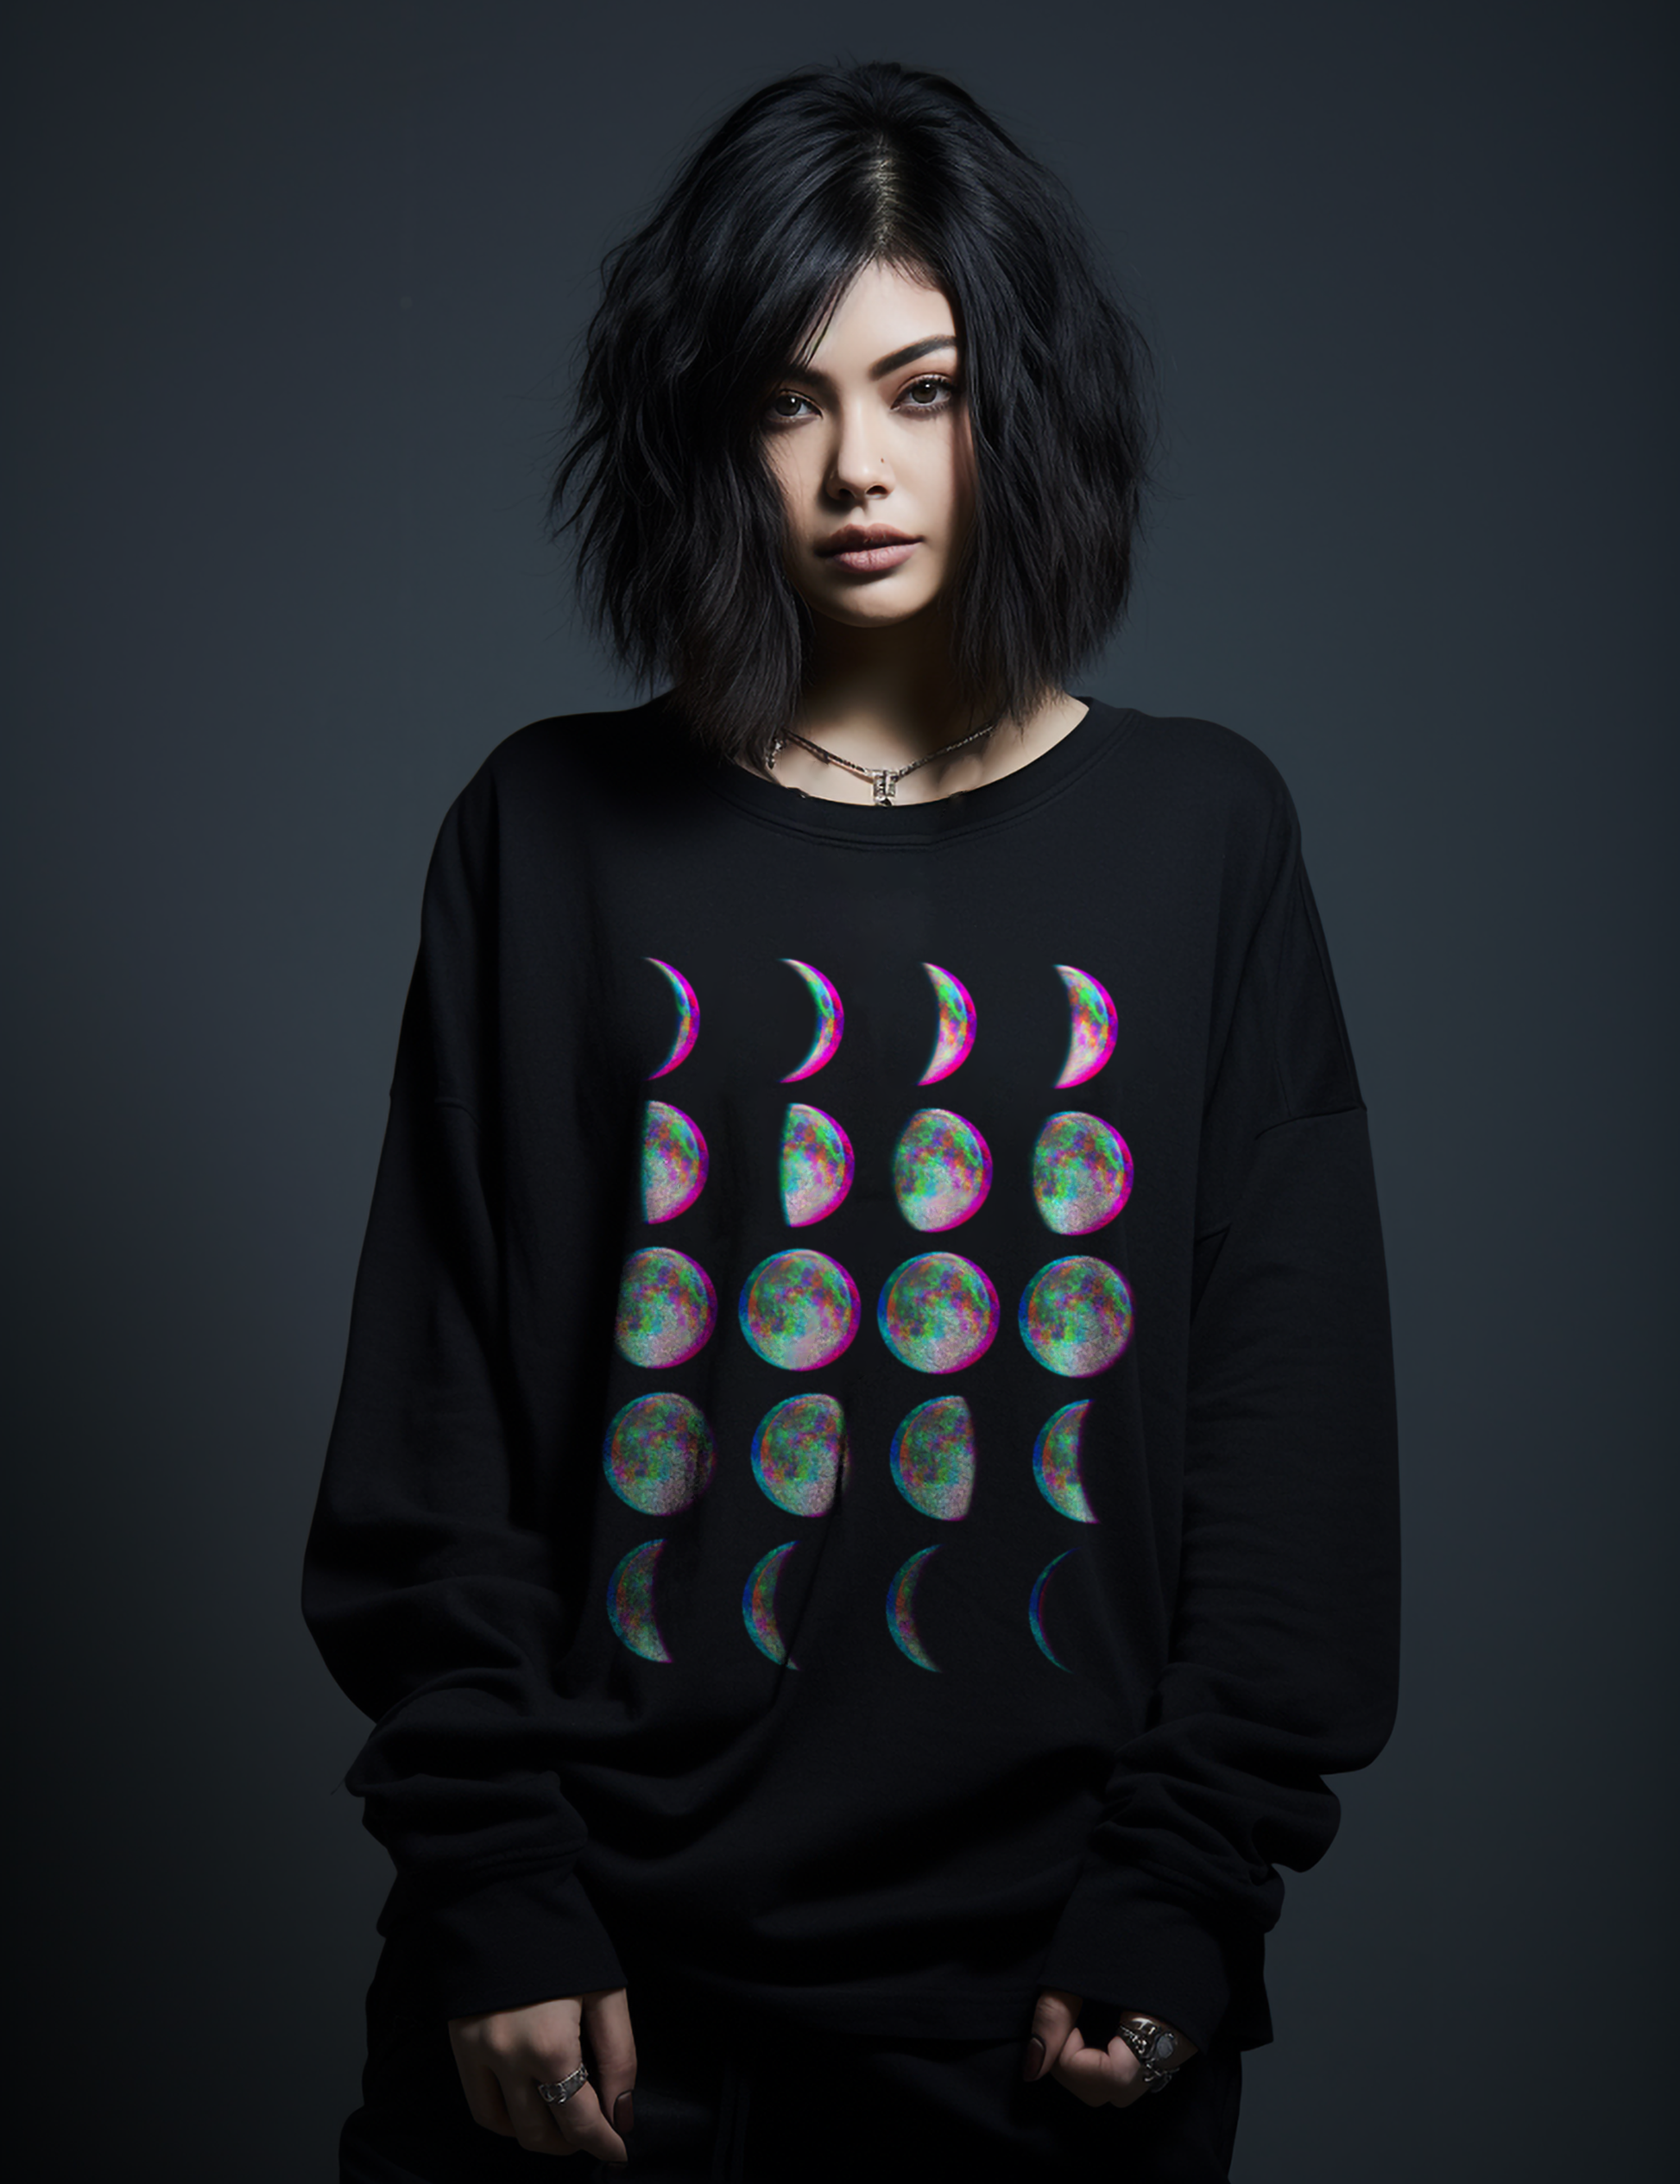 Glitch Moon Phase Plus Size Goth Edgy Witchy Mystical Sweatshirt